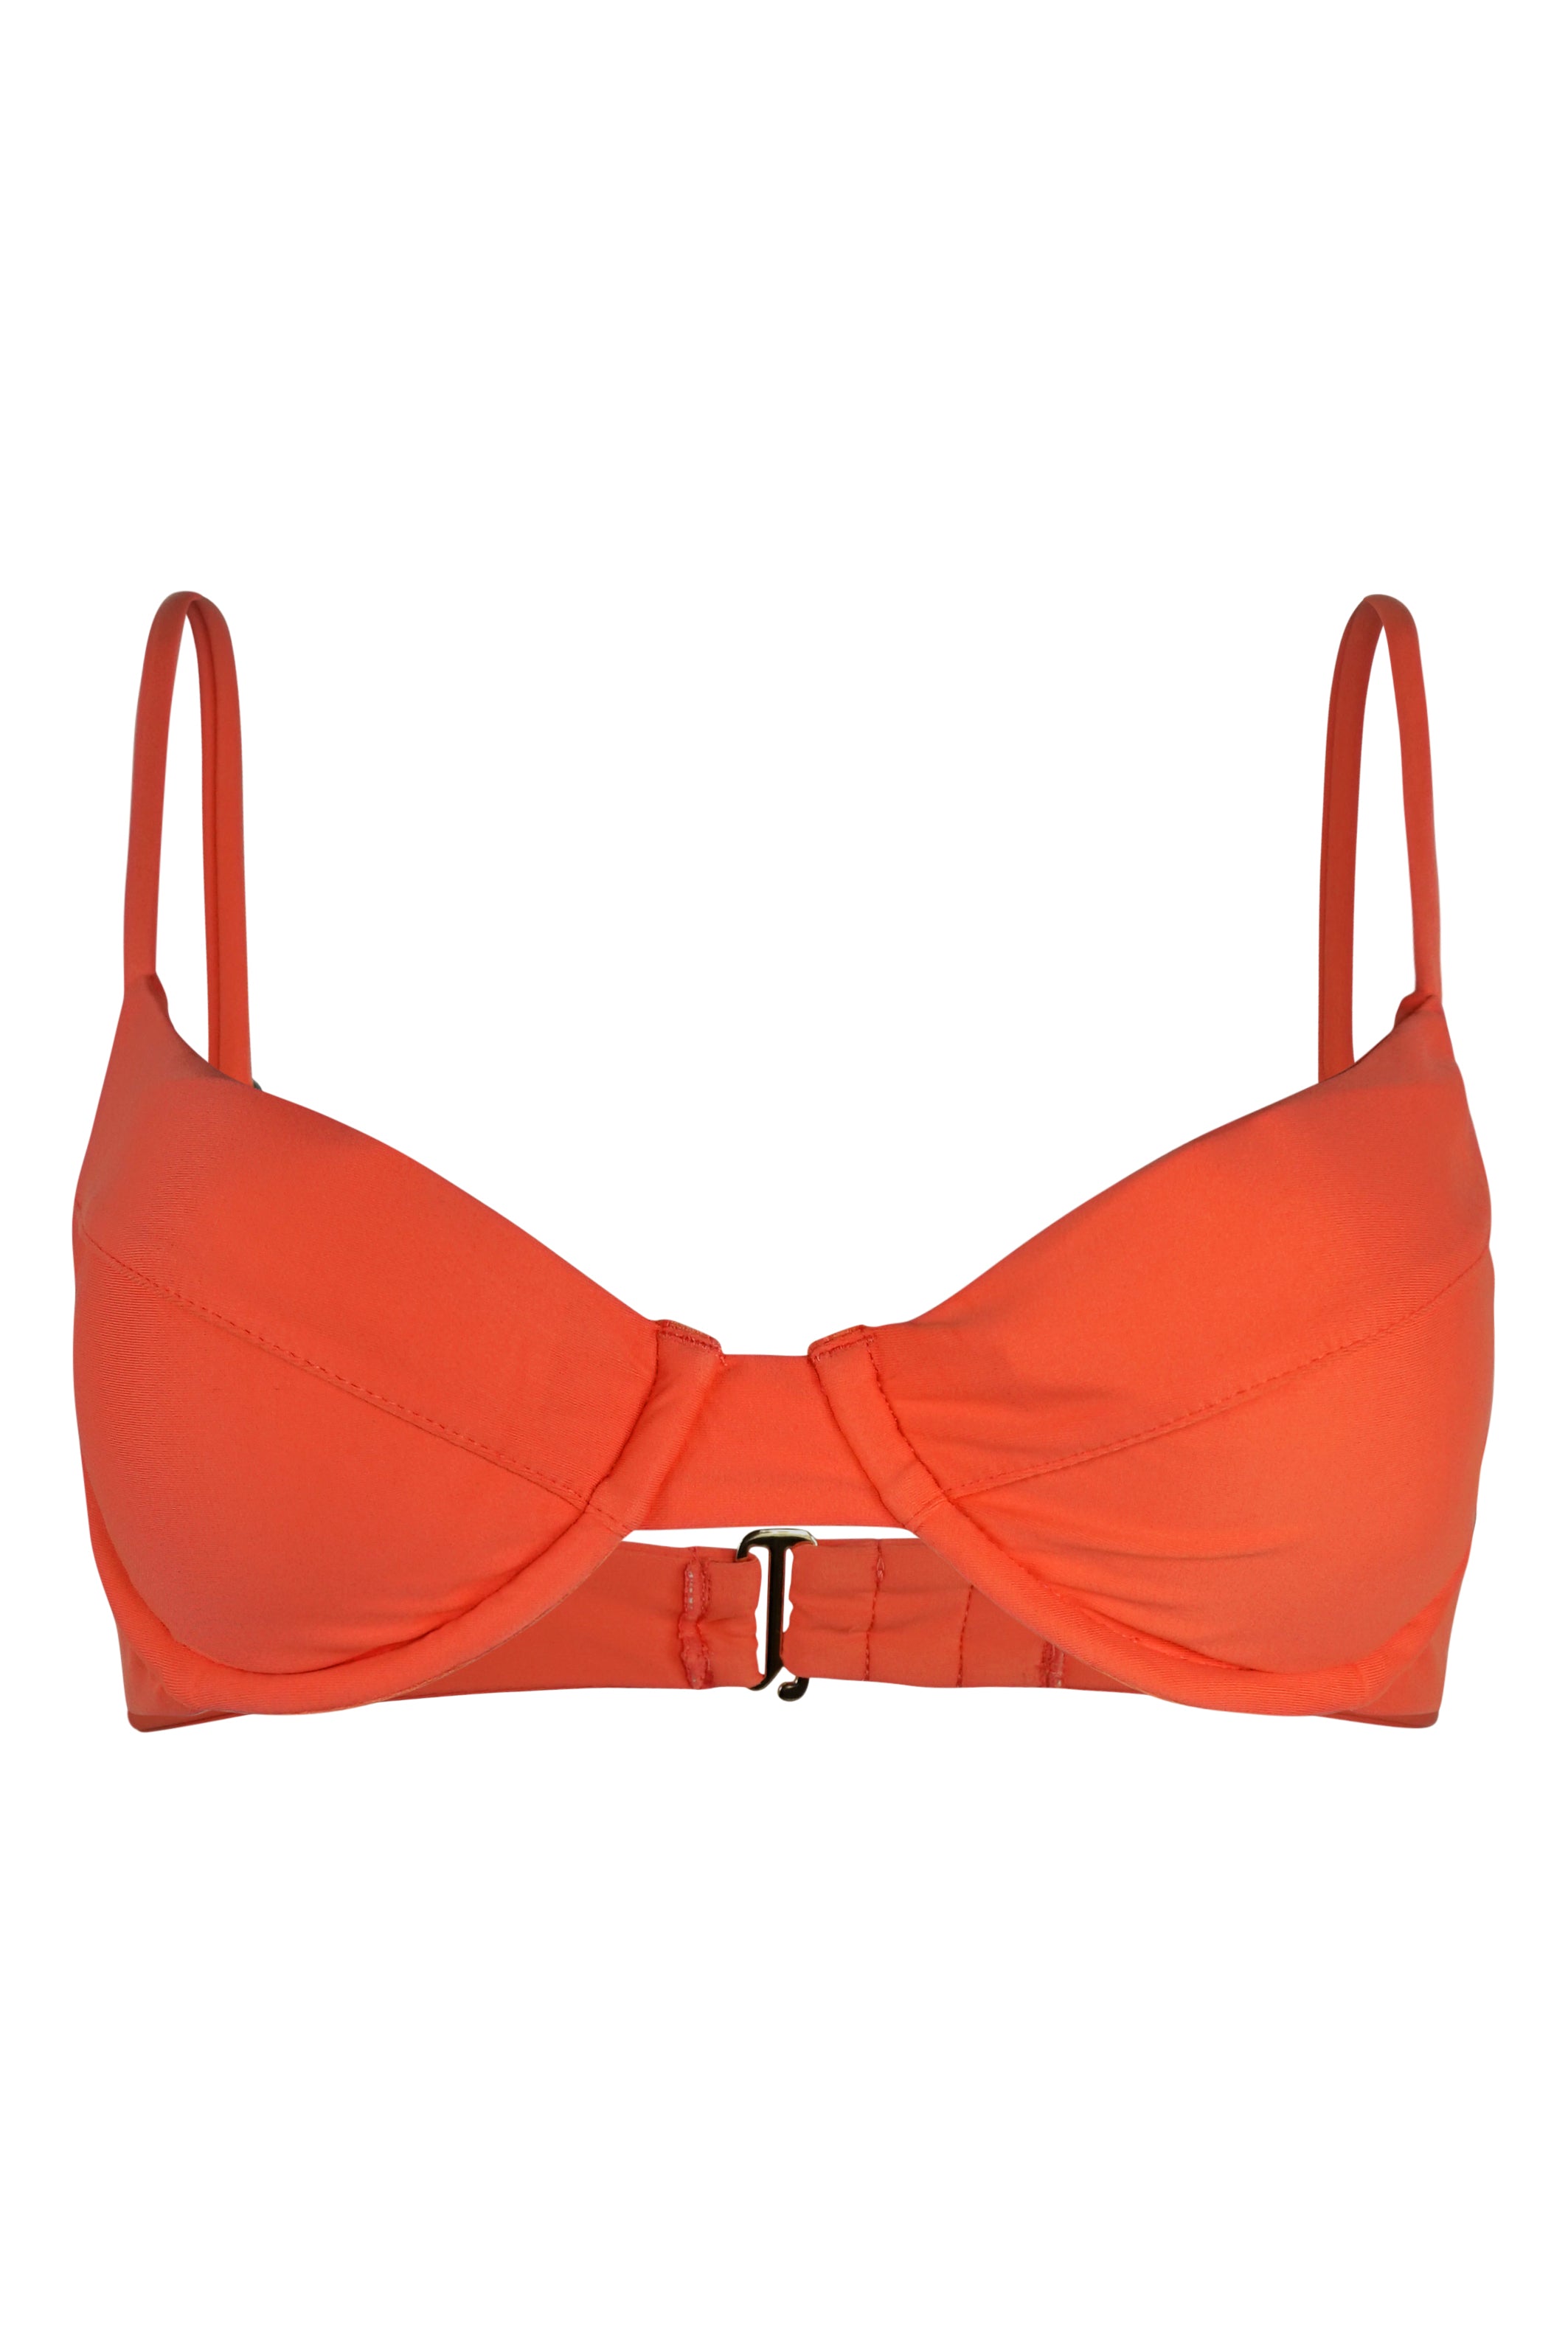 St Lucia Bikini Top | Sherbet Orange | Salty Bottom Swimwear